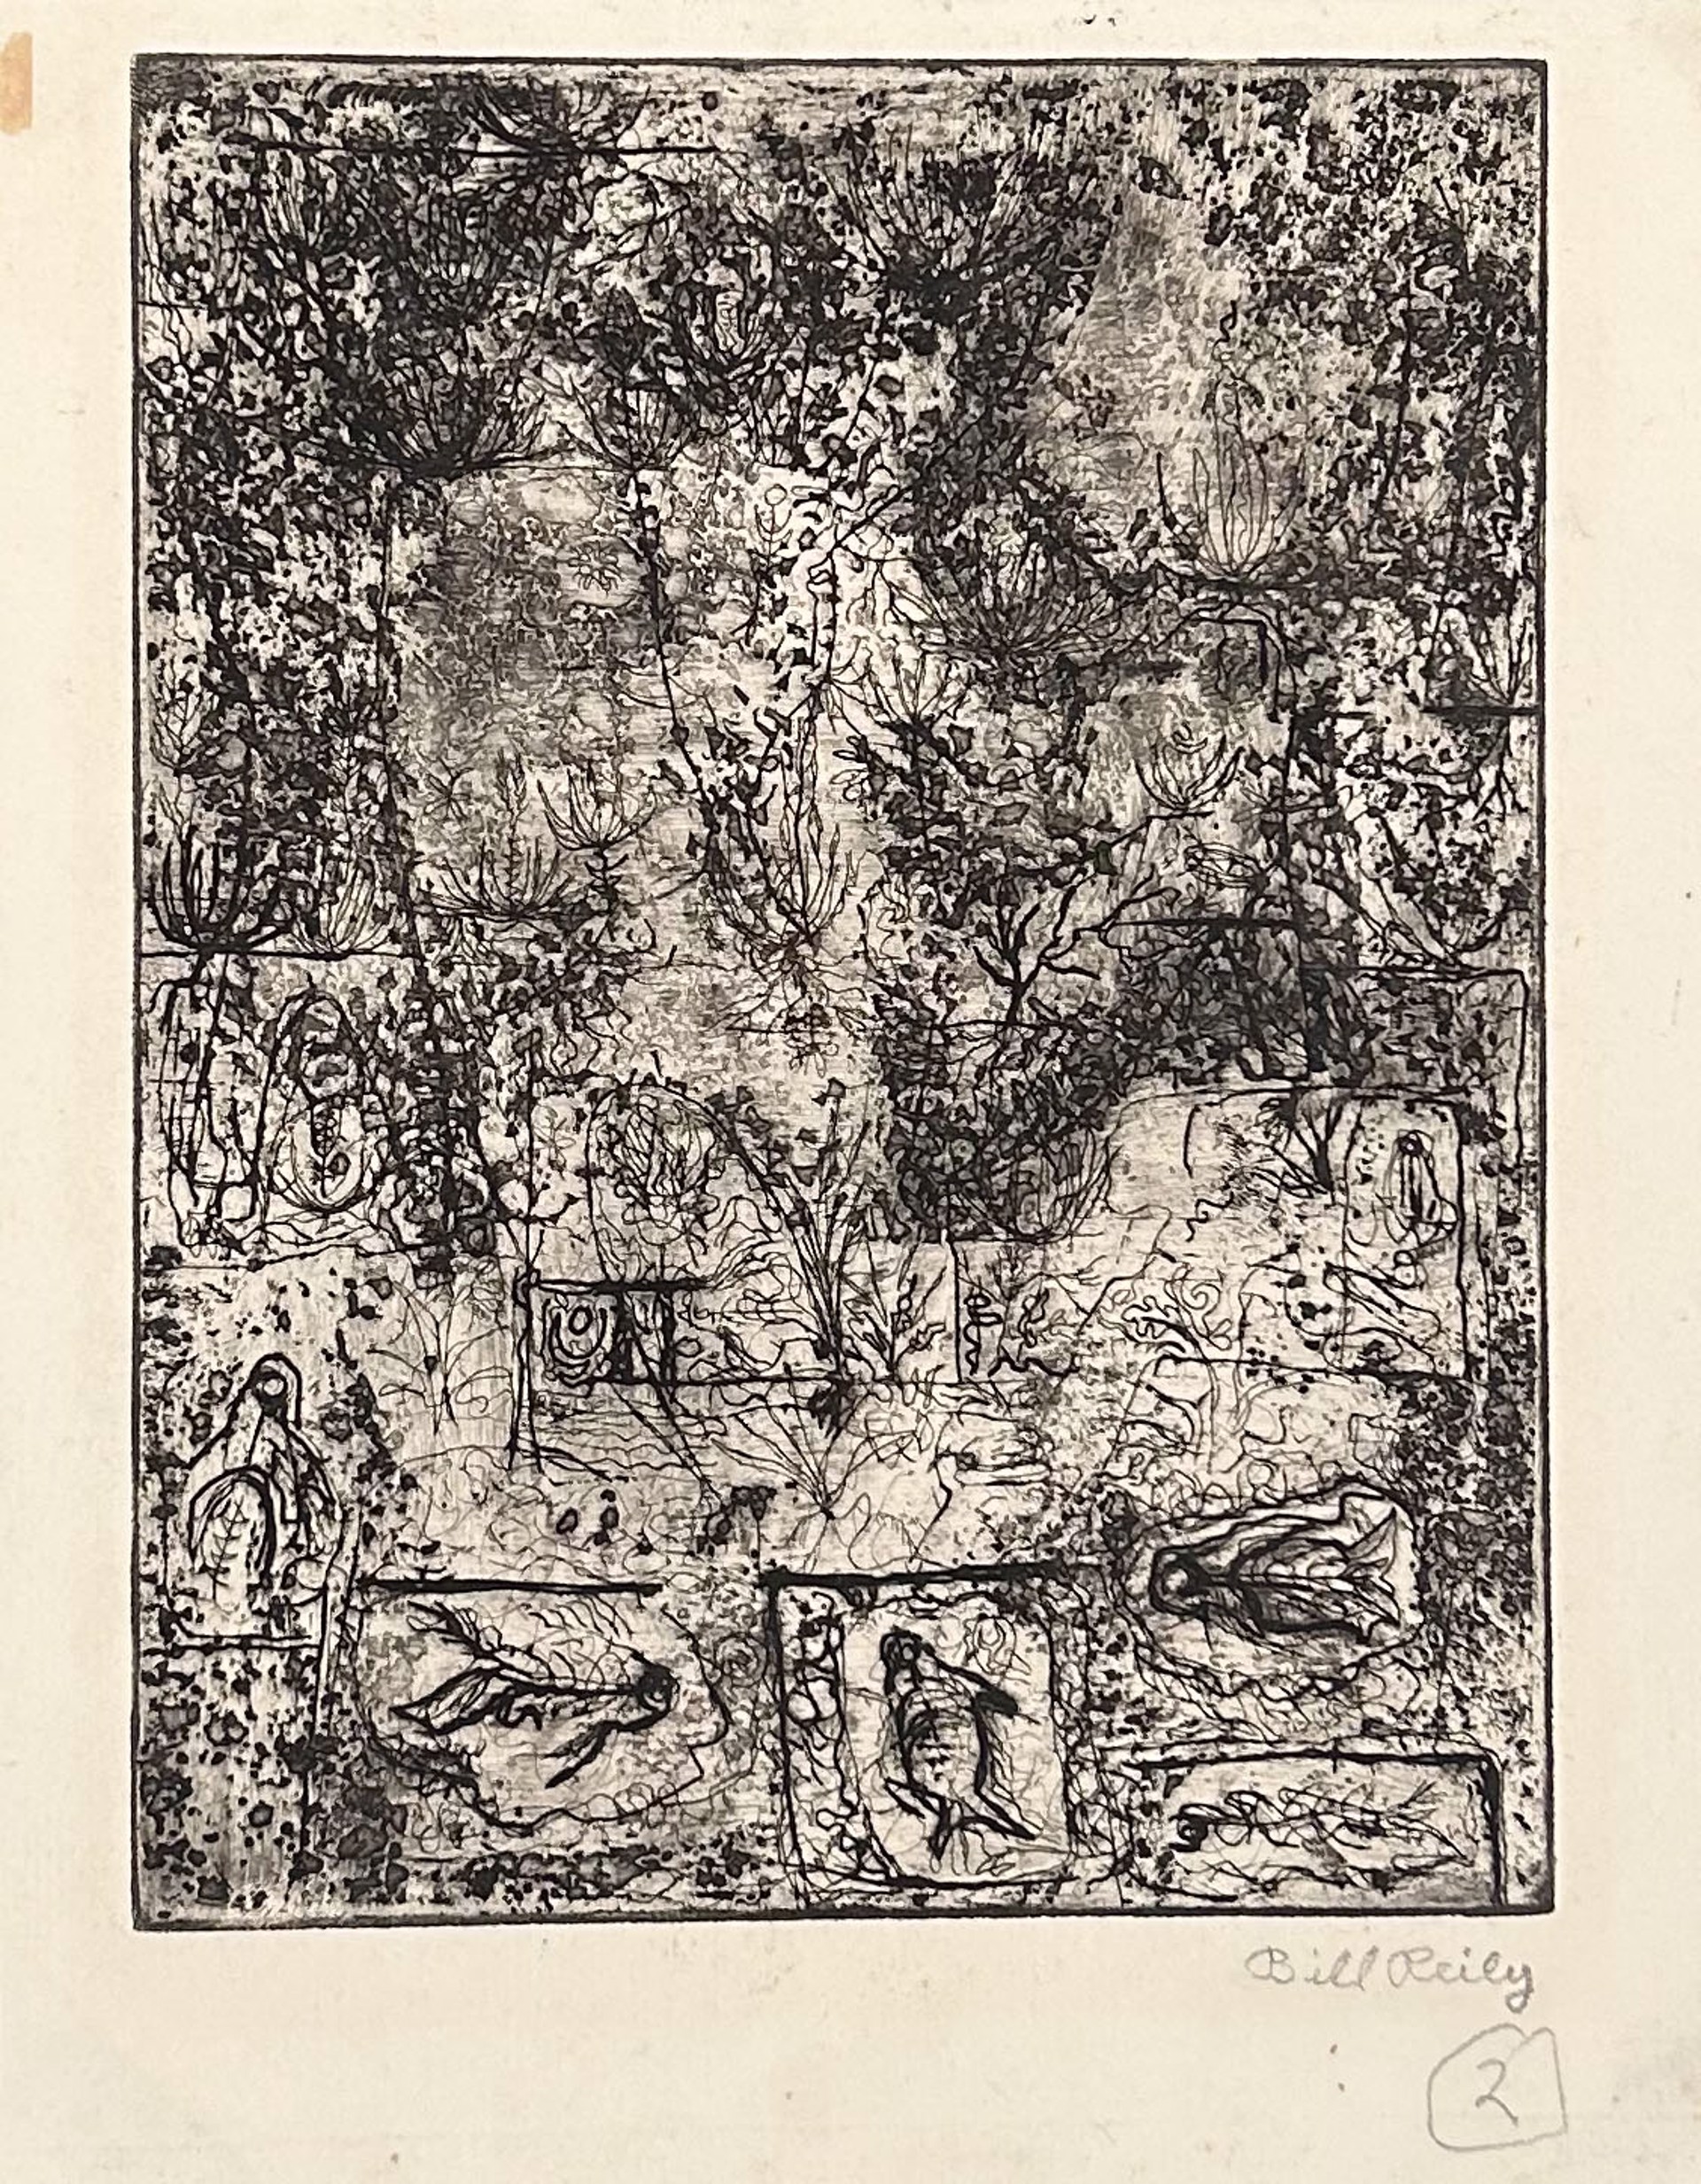 2b. Fish Pond by Bill Reily - Prints